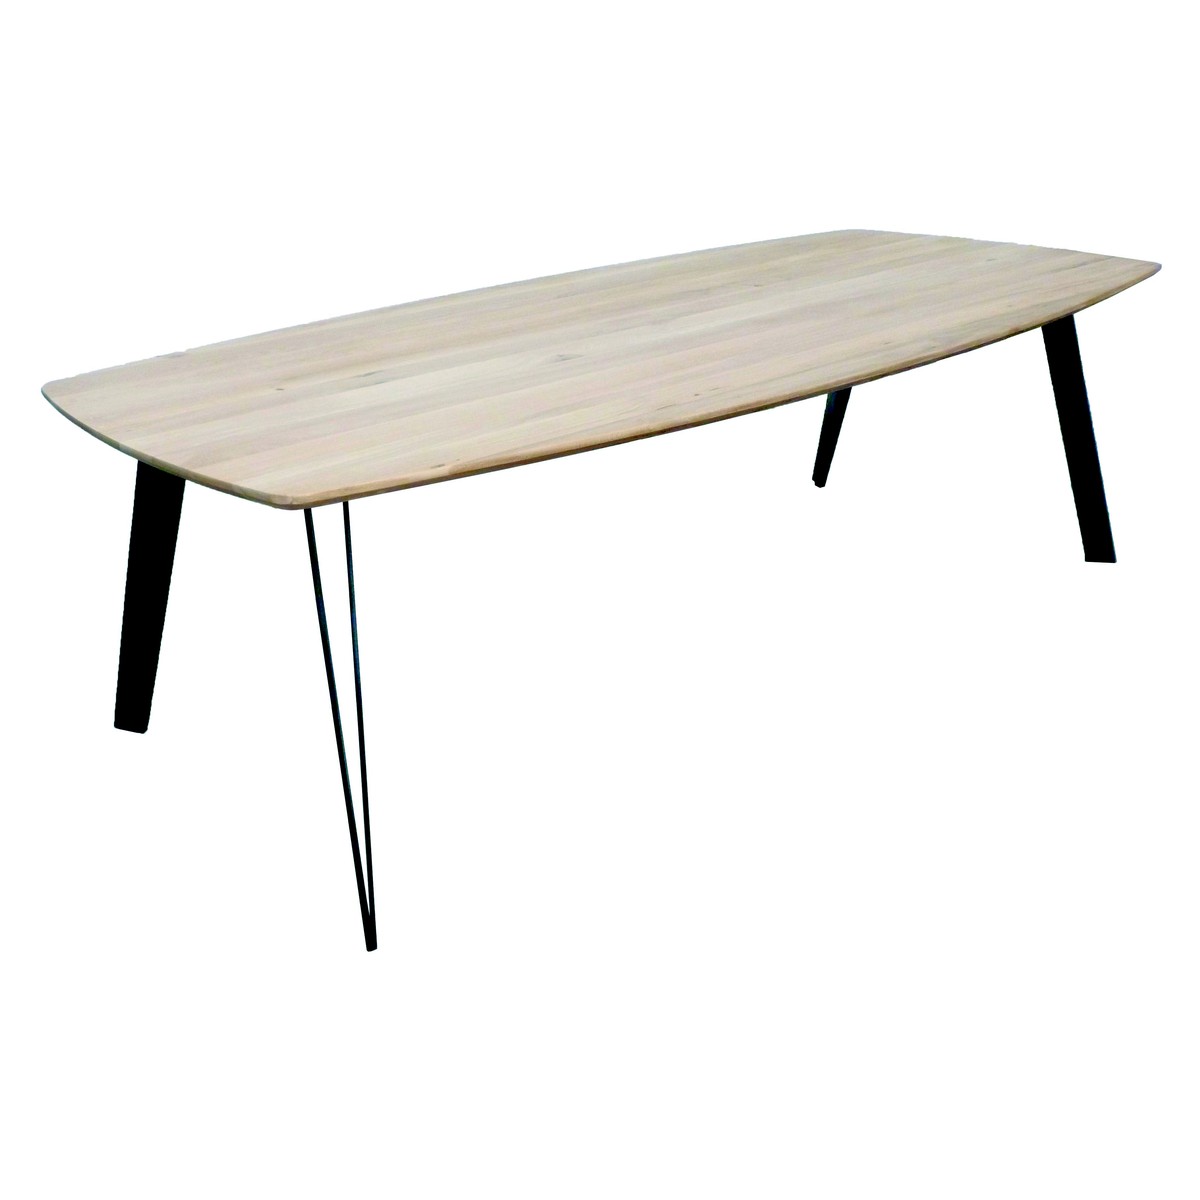   Table Viky Beveled ovale  240x110x77cm